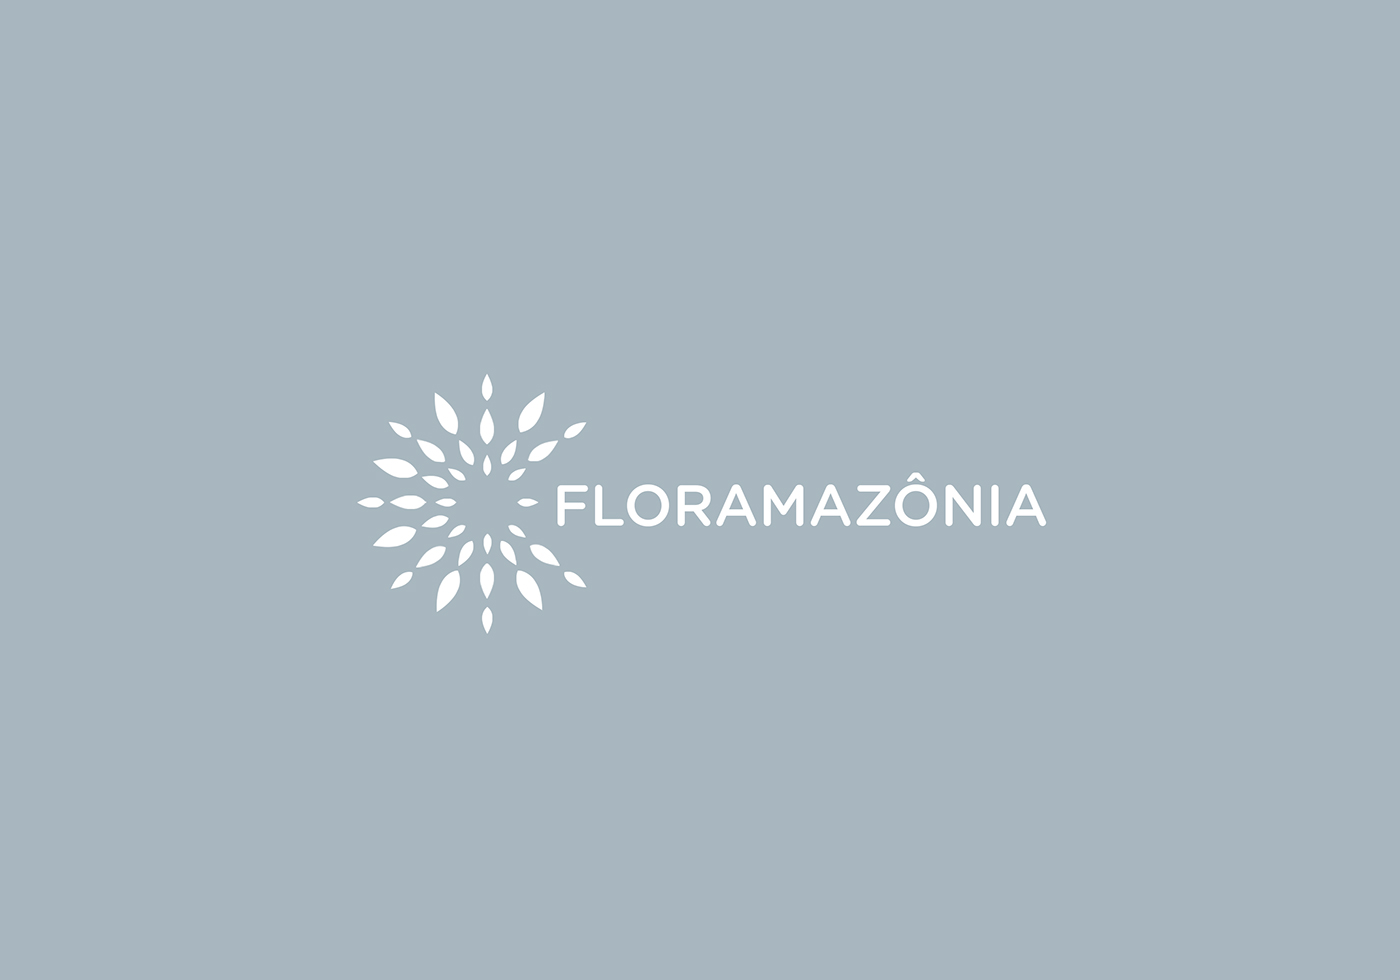 flor amazonia Flores marca Logotipo Cores identidade visual